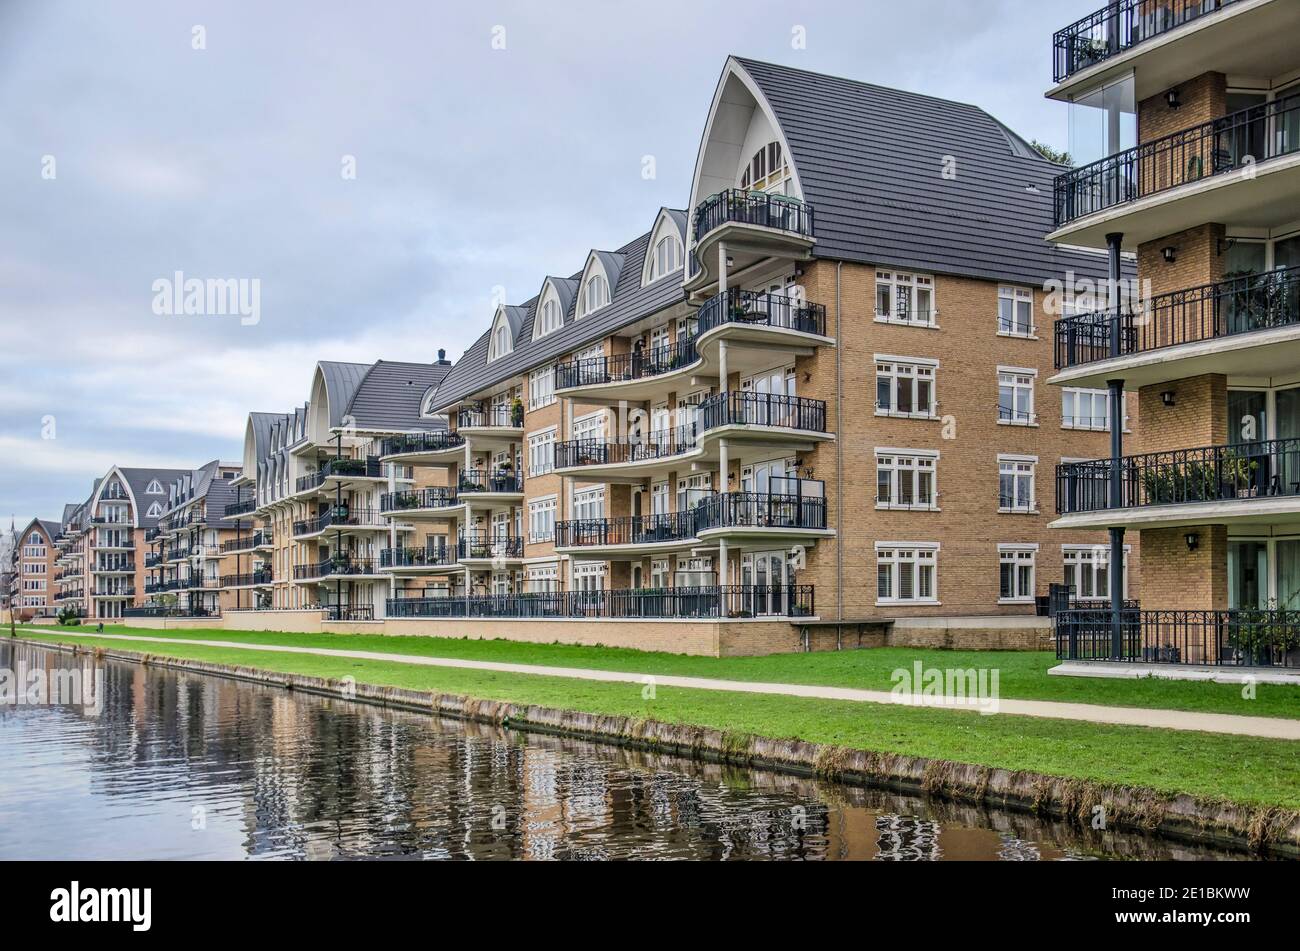 Voorschoten, The Netherlands, January 3, 2021: row of apartment blocks along a canal in Krimwijk neighbourhood with brick facades in post-modern eclec Stock Photo